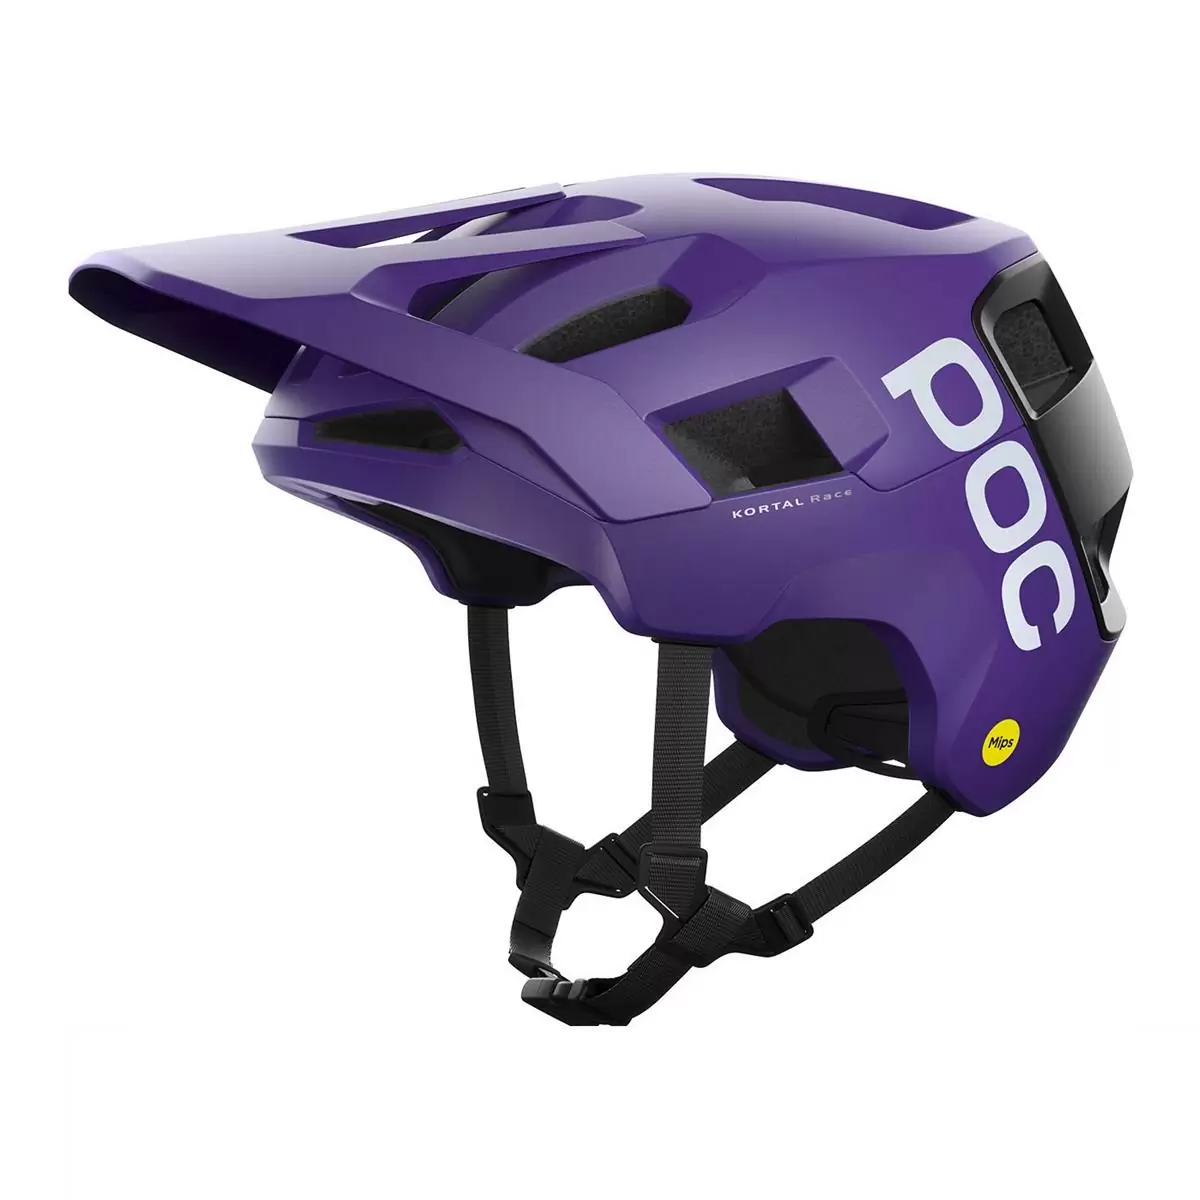 Helmet Kortal Race MIPS Sapphire Purple size XS-S (51-54cm) - image